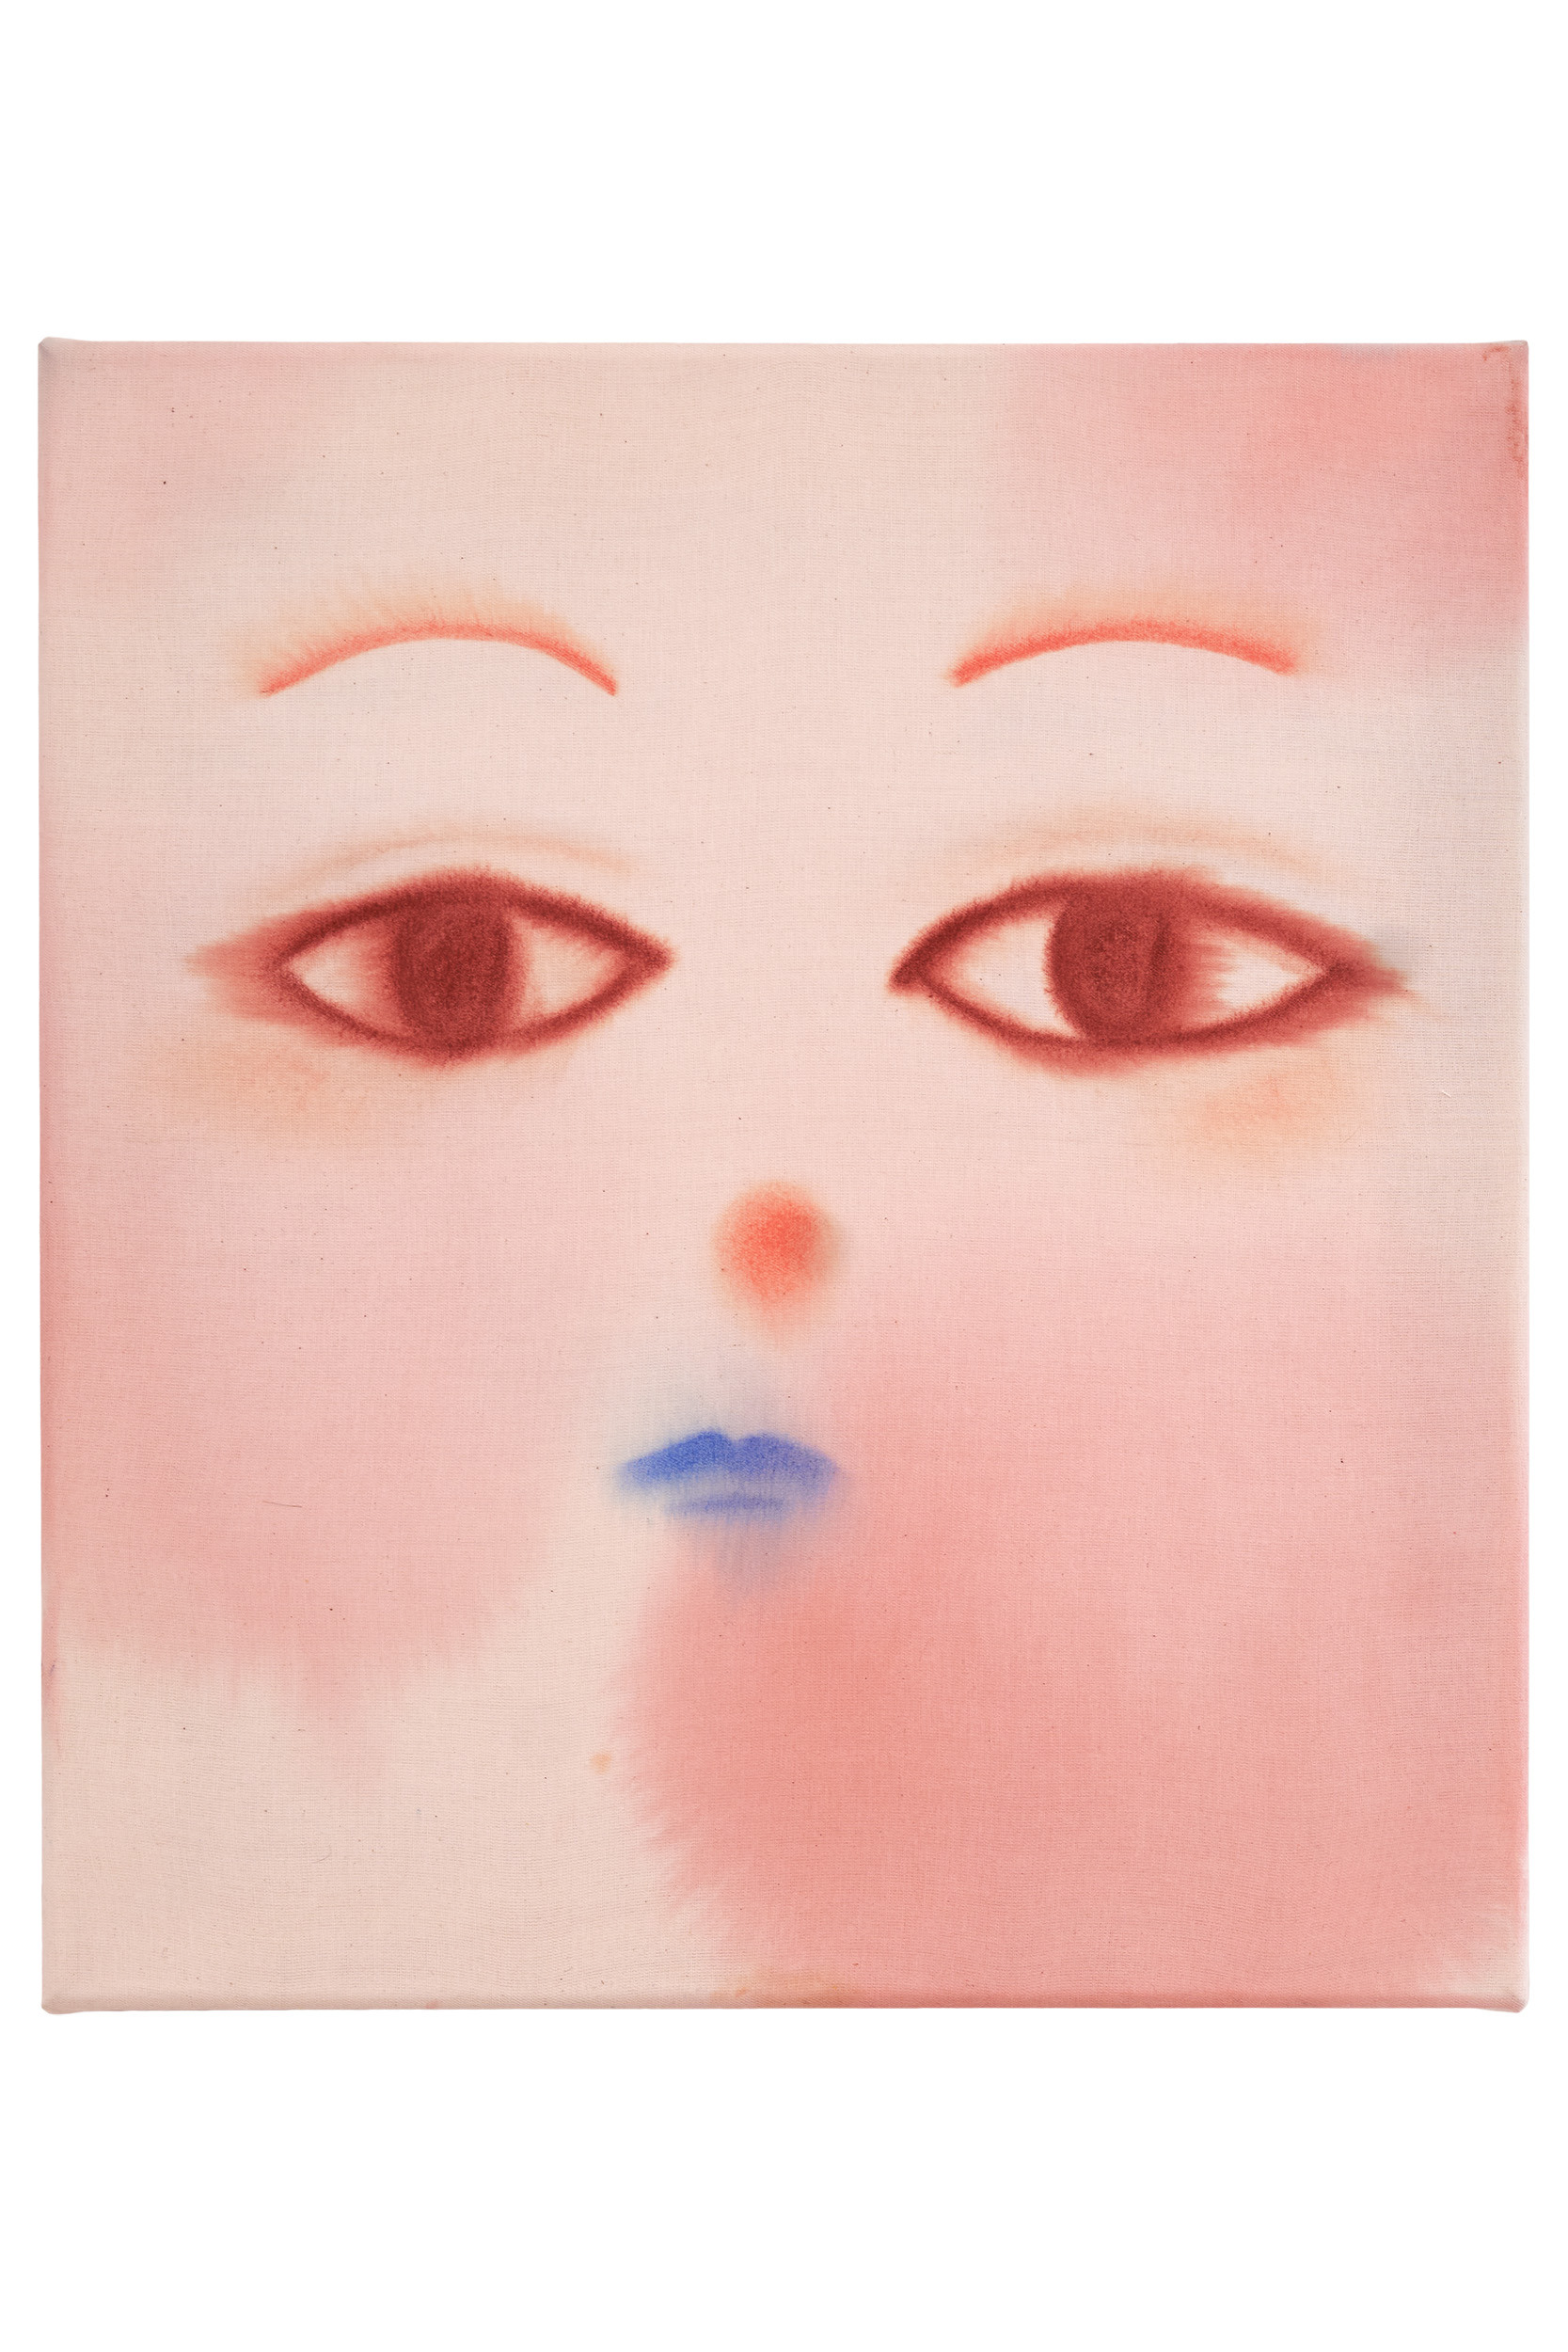 Olga Krykun, untitled (09), from the Summer Forget-me-nots / Літні незабудки series, 45 x 40 cm, mixed media on canvas. Photo: Bartosz Zalewski